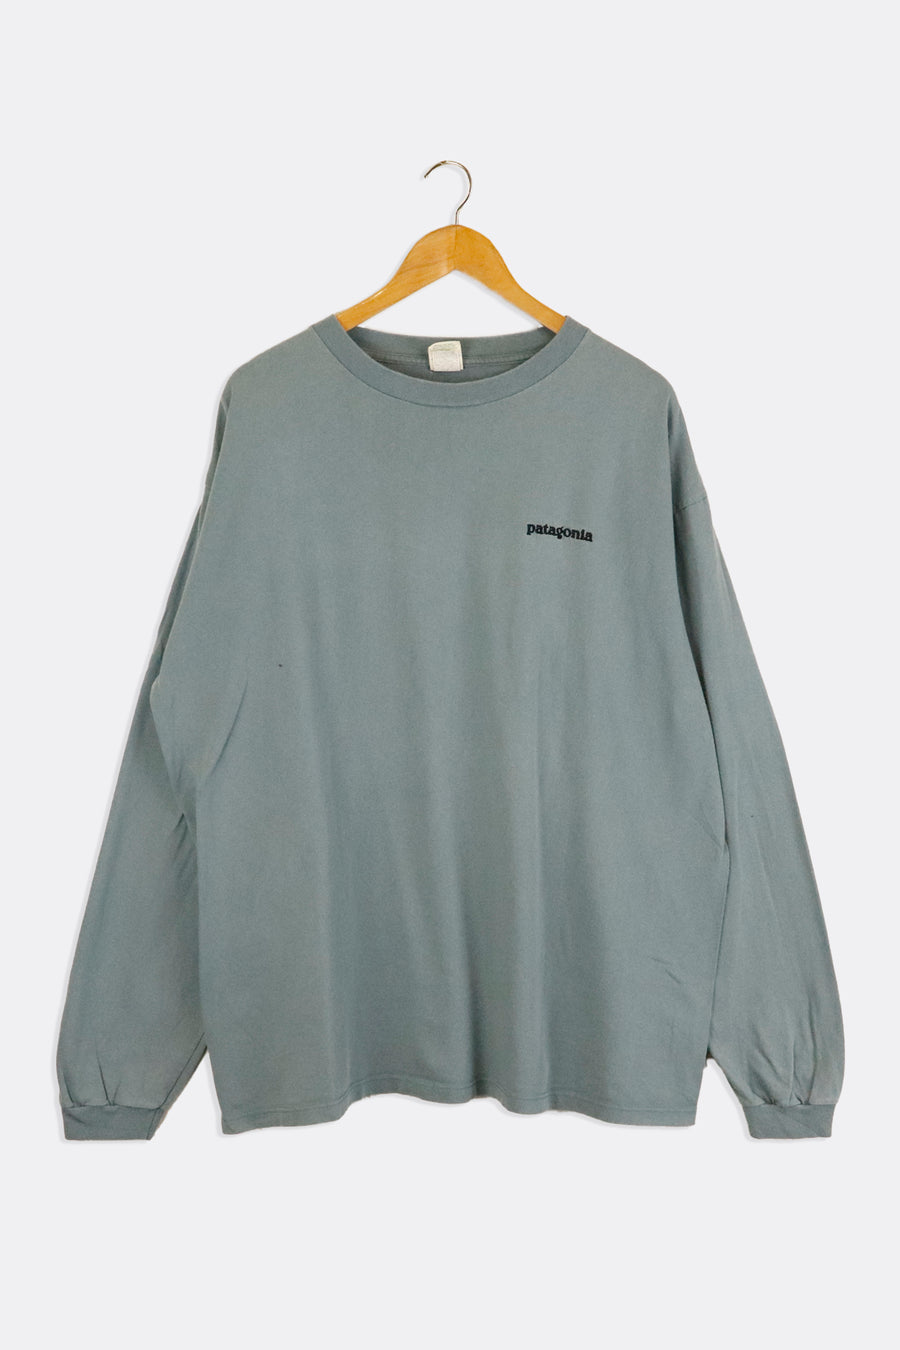 Vintage Patigonia Plain Long Sleeve Embroidered Lettering T Shirt Sz XL